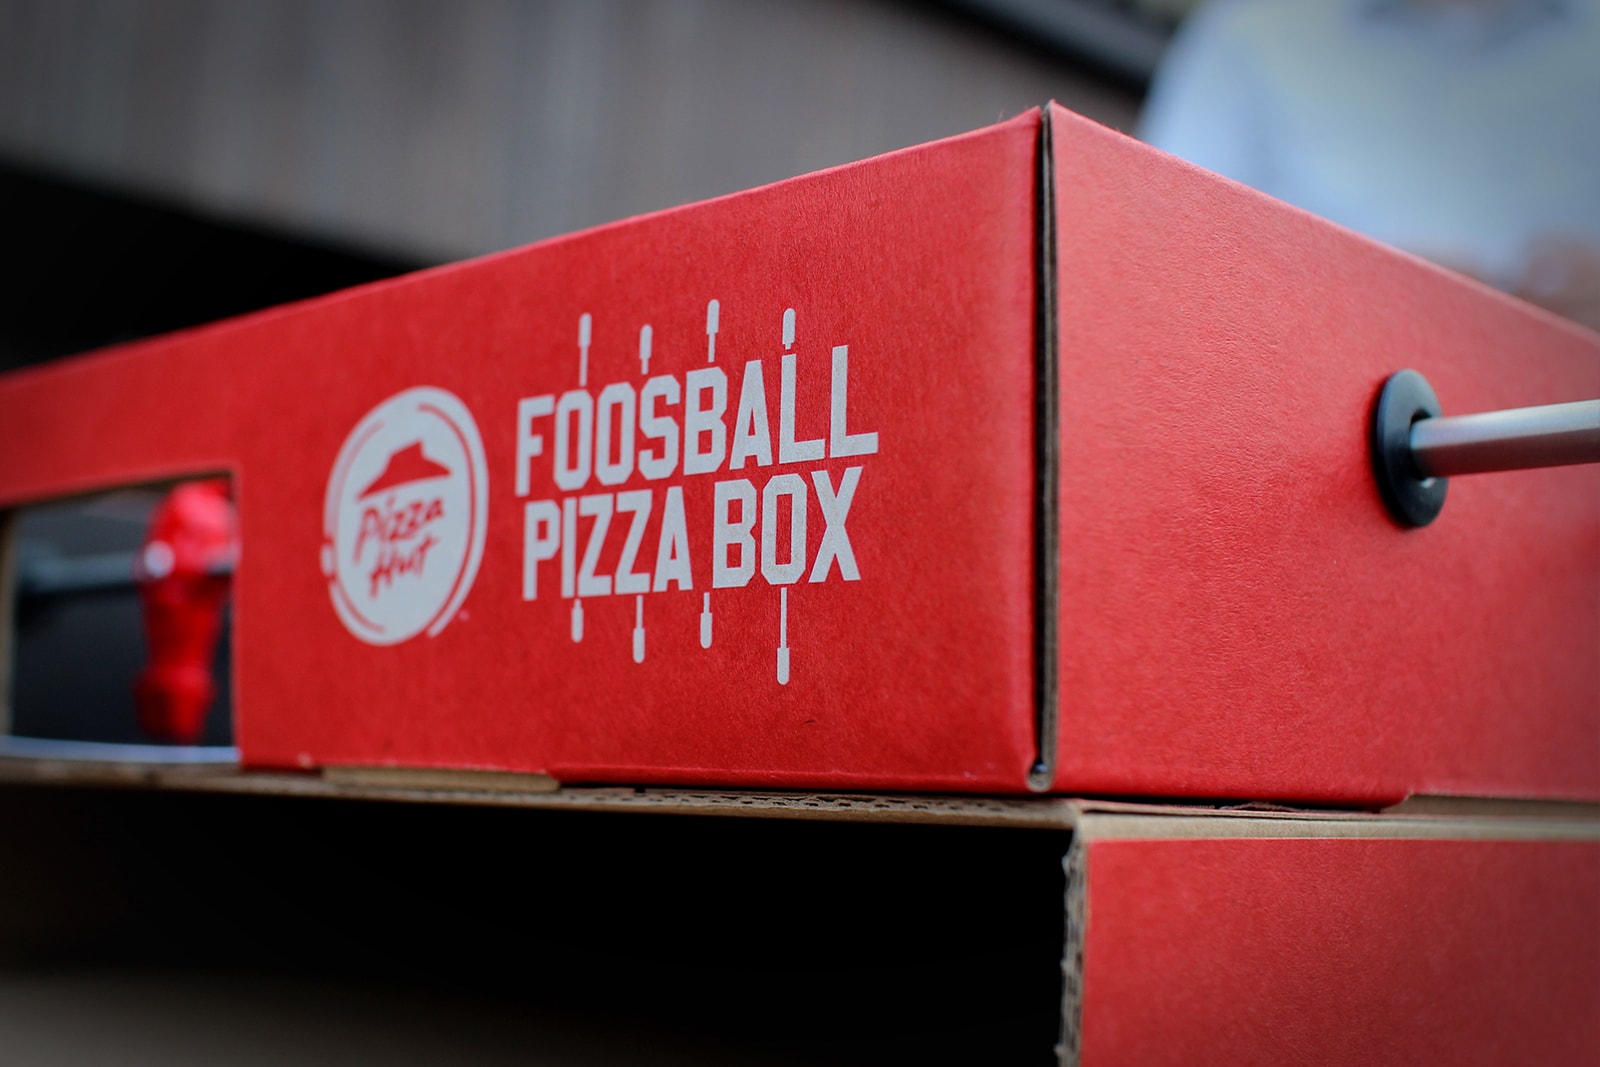 Pizza Hut 推出可遊玩桌上足球台造型披薩盒